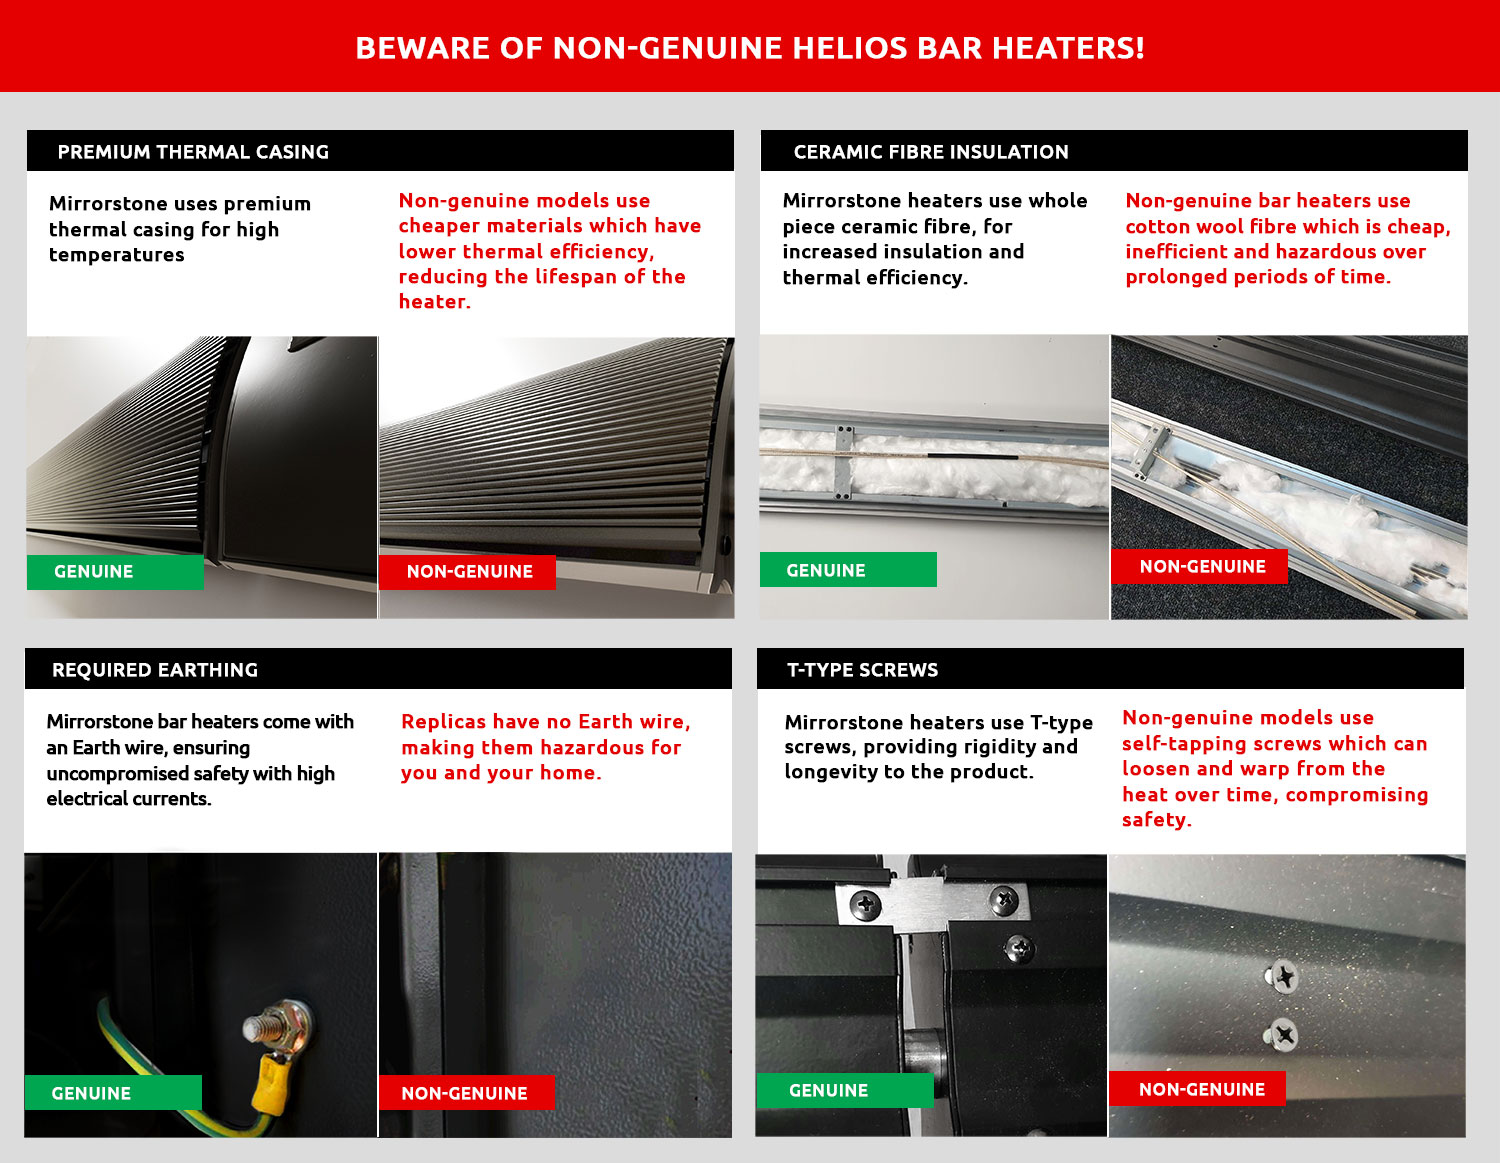 Mirrrorstone Infrared Bar Heaters vs. Non-genuine Bar Heaters